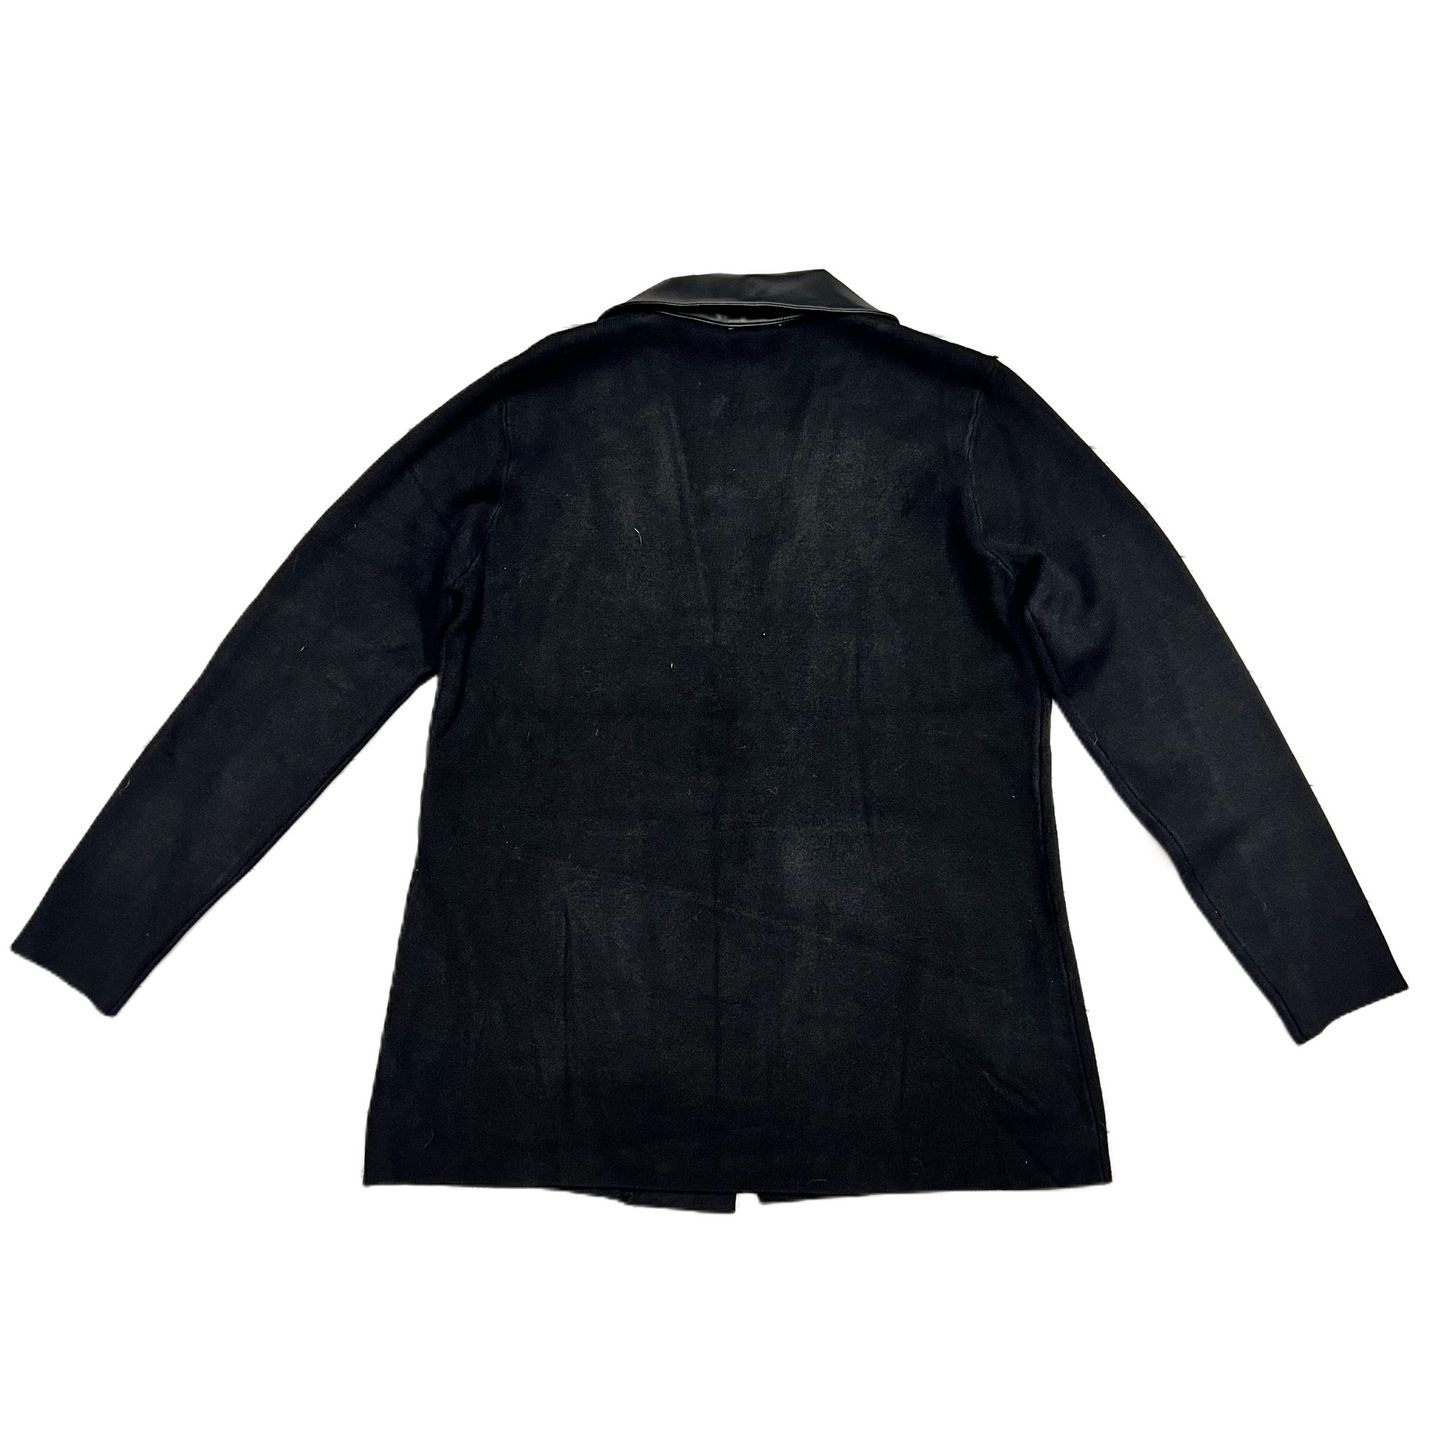 Black Sweater Cardigan By Sioni, Size: L